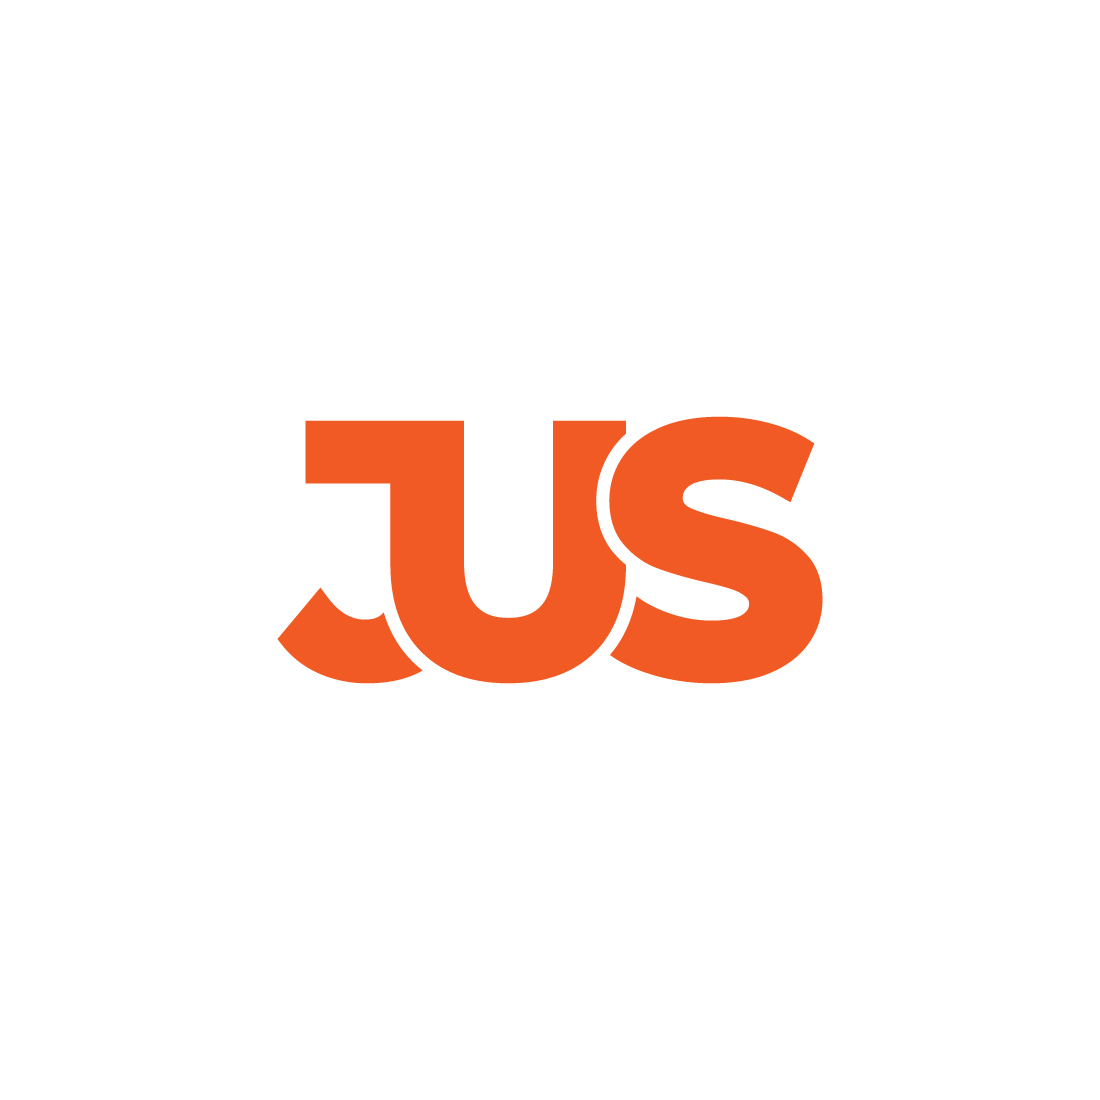 JUS Letter Logo design preview image.